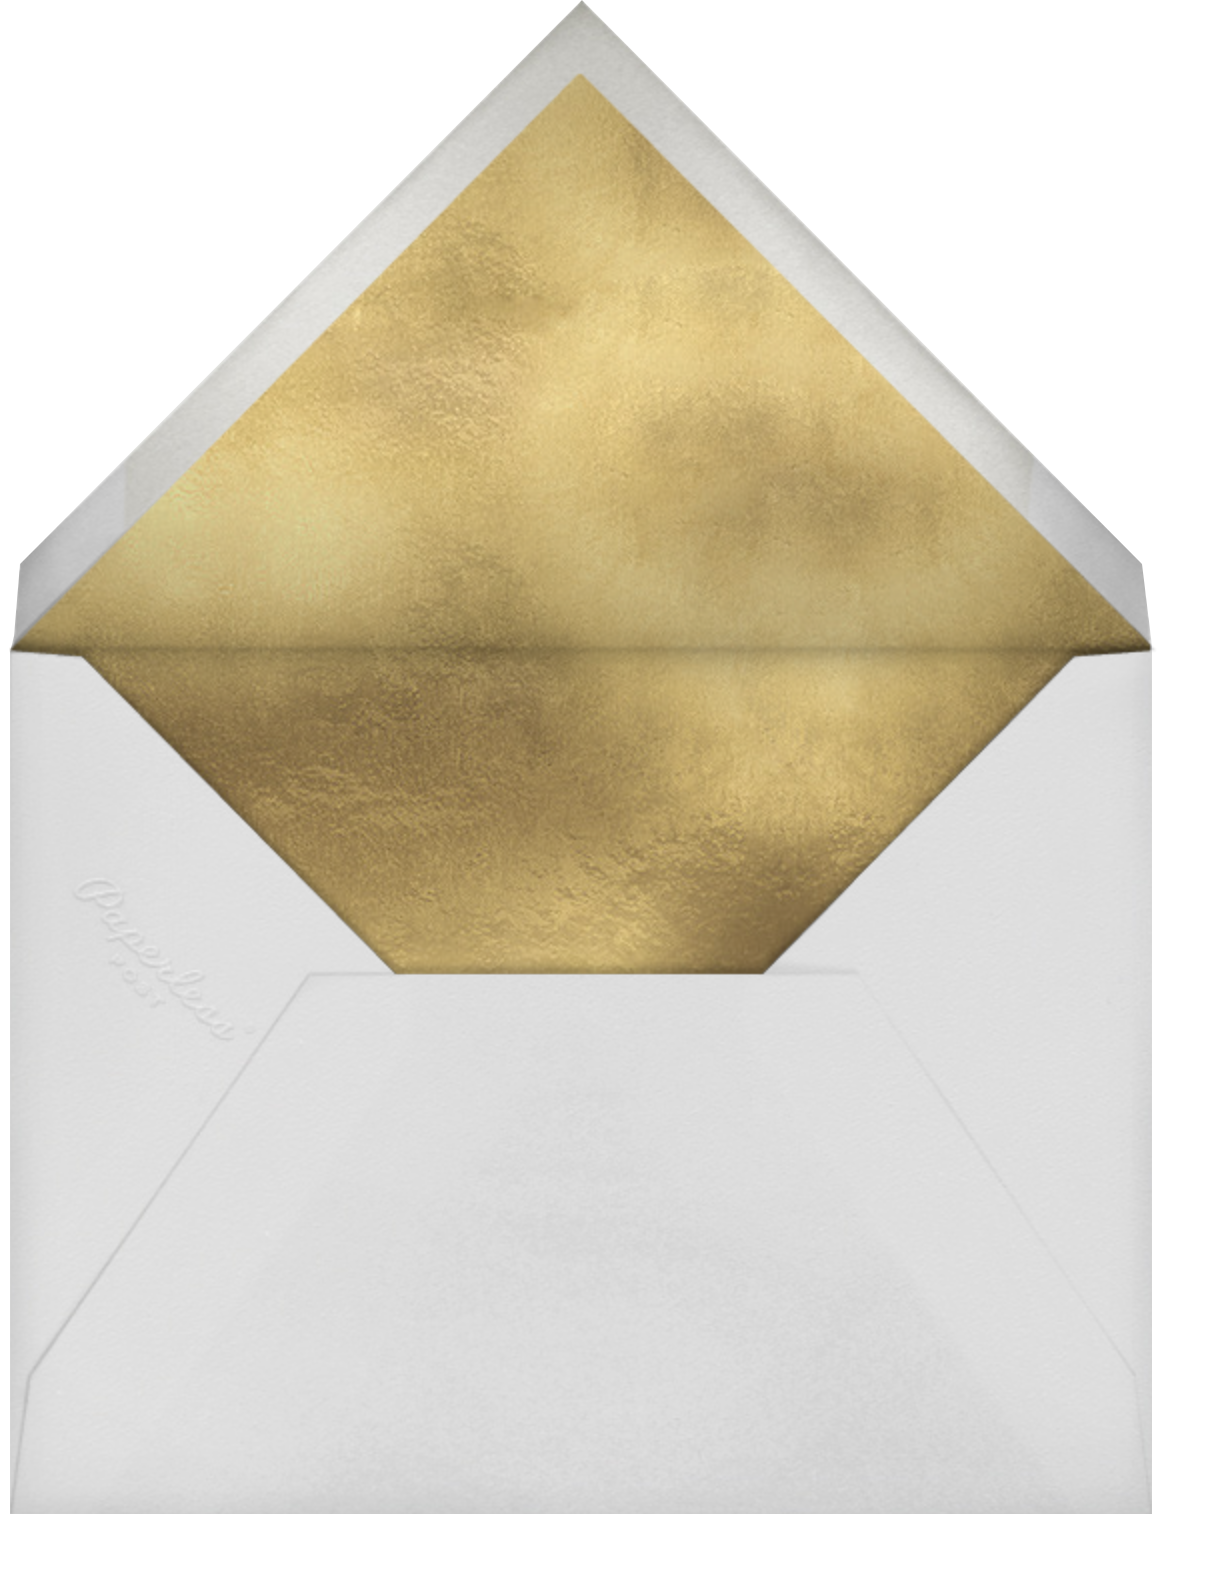 Letters to Santa - Rifle Paper Co. - Envelope